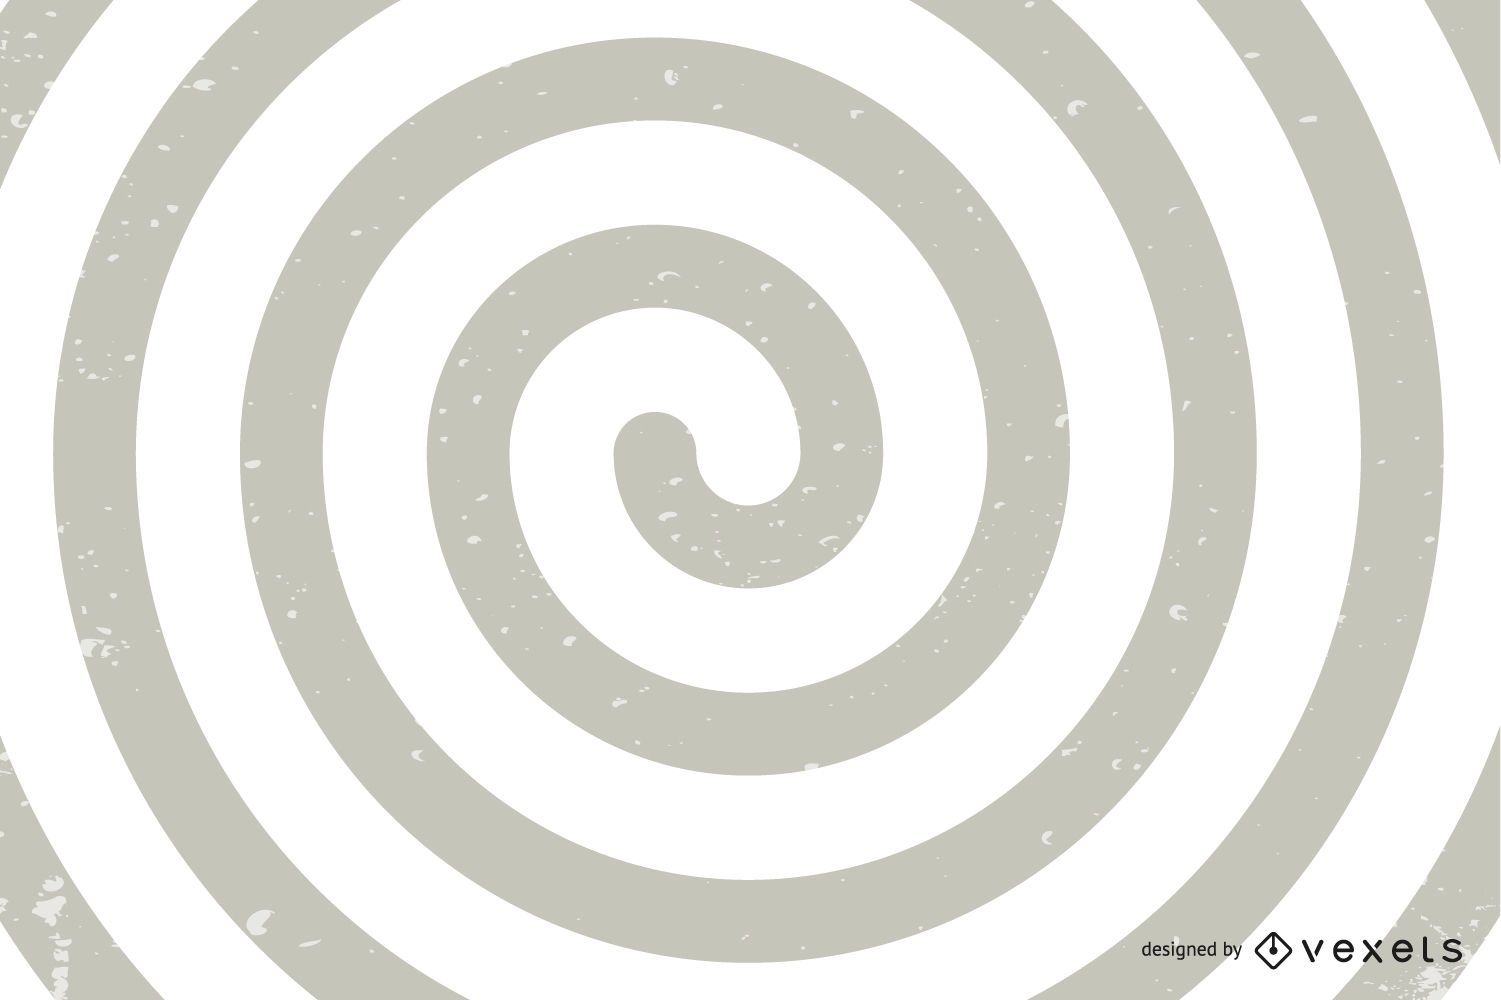 Spiral optical illusion